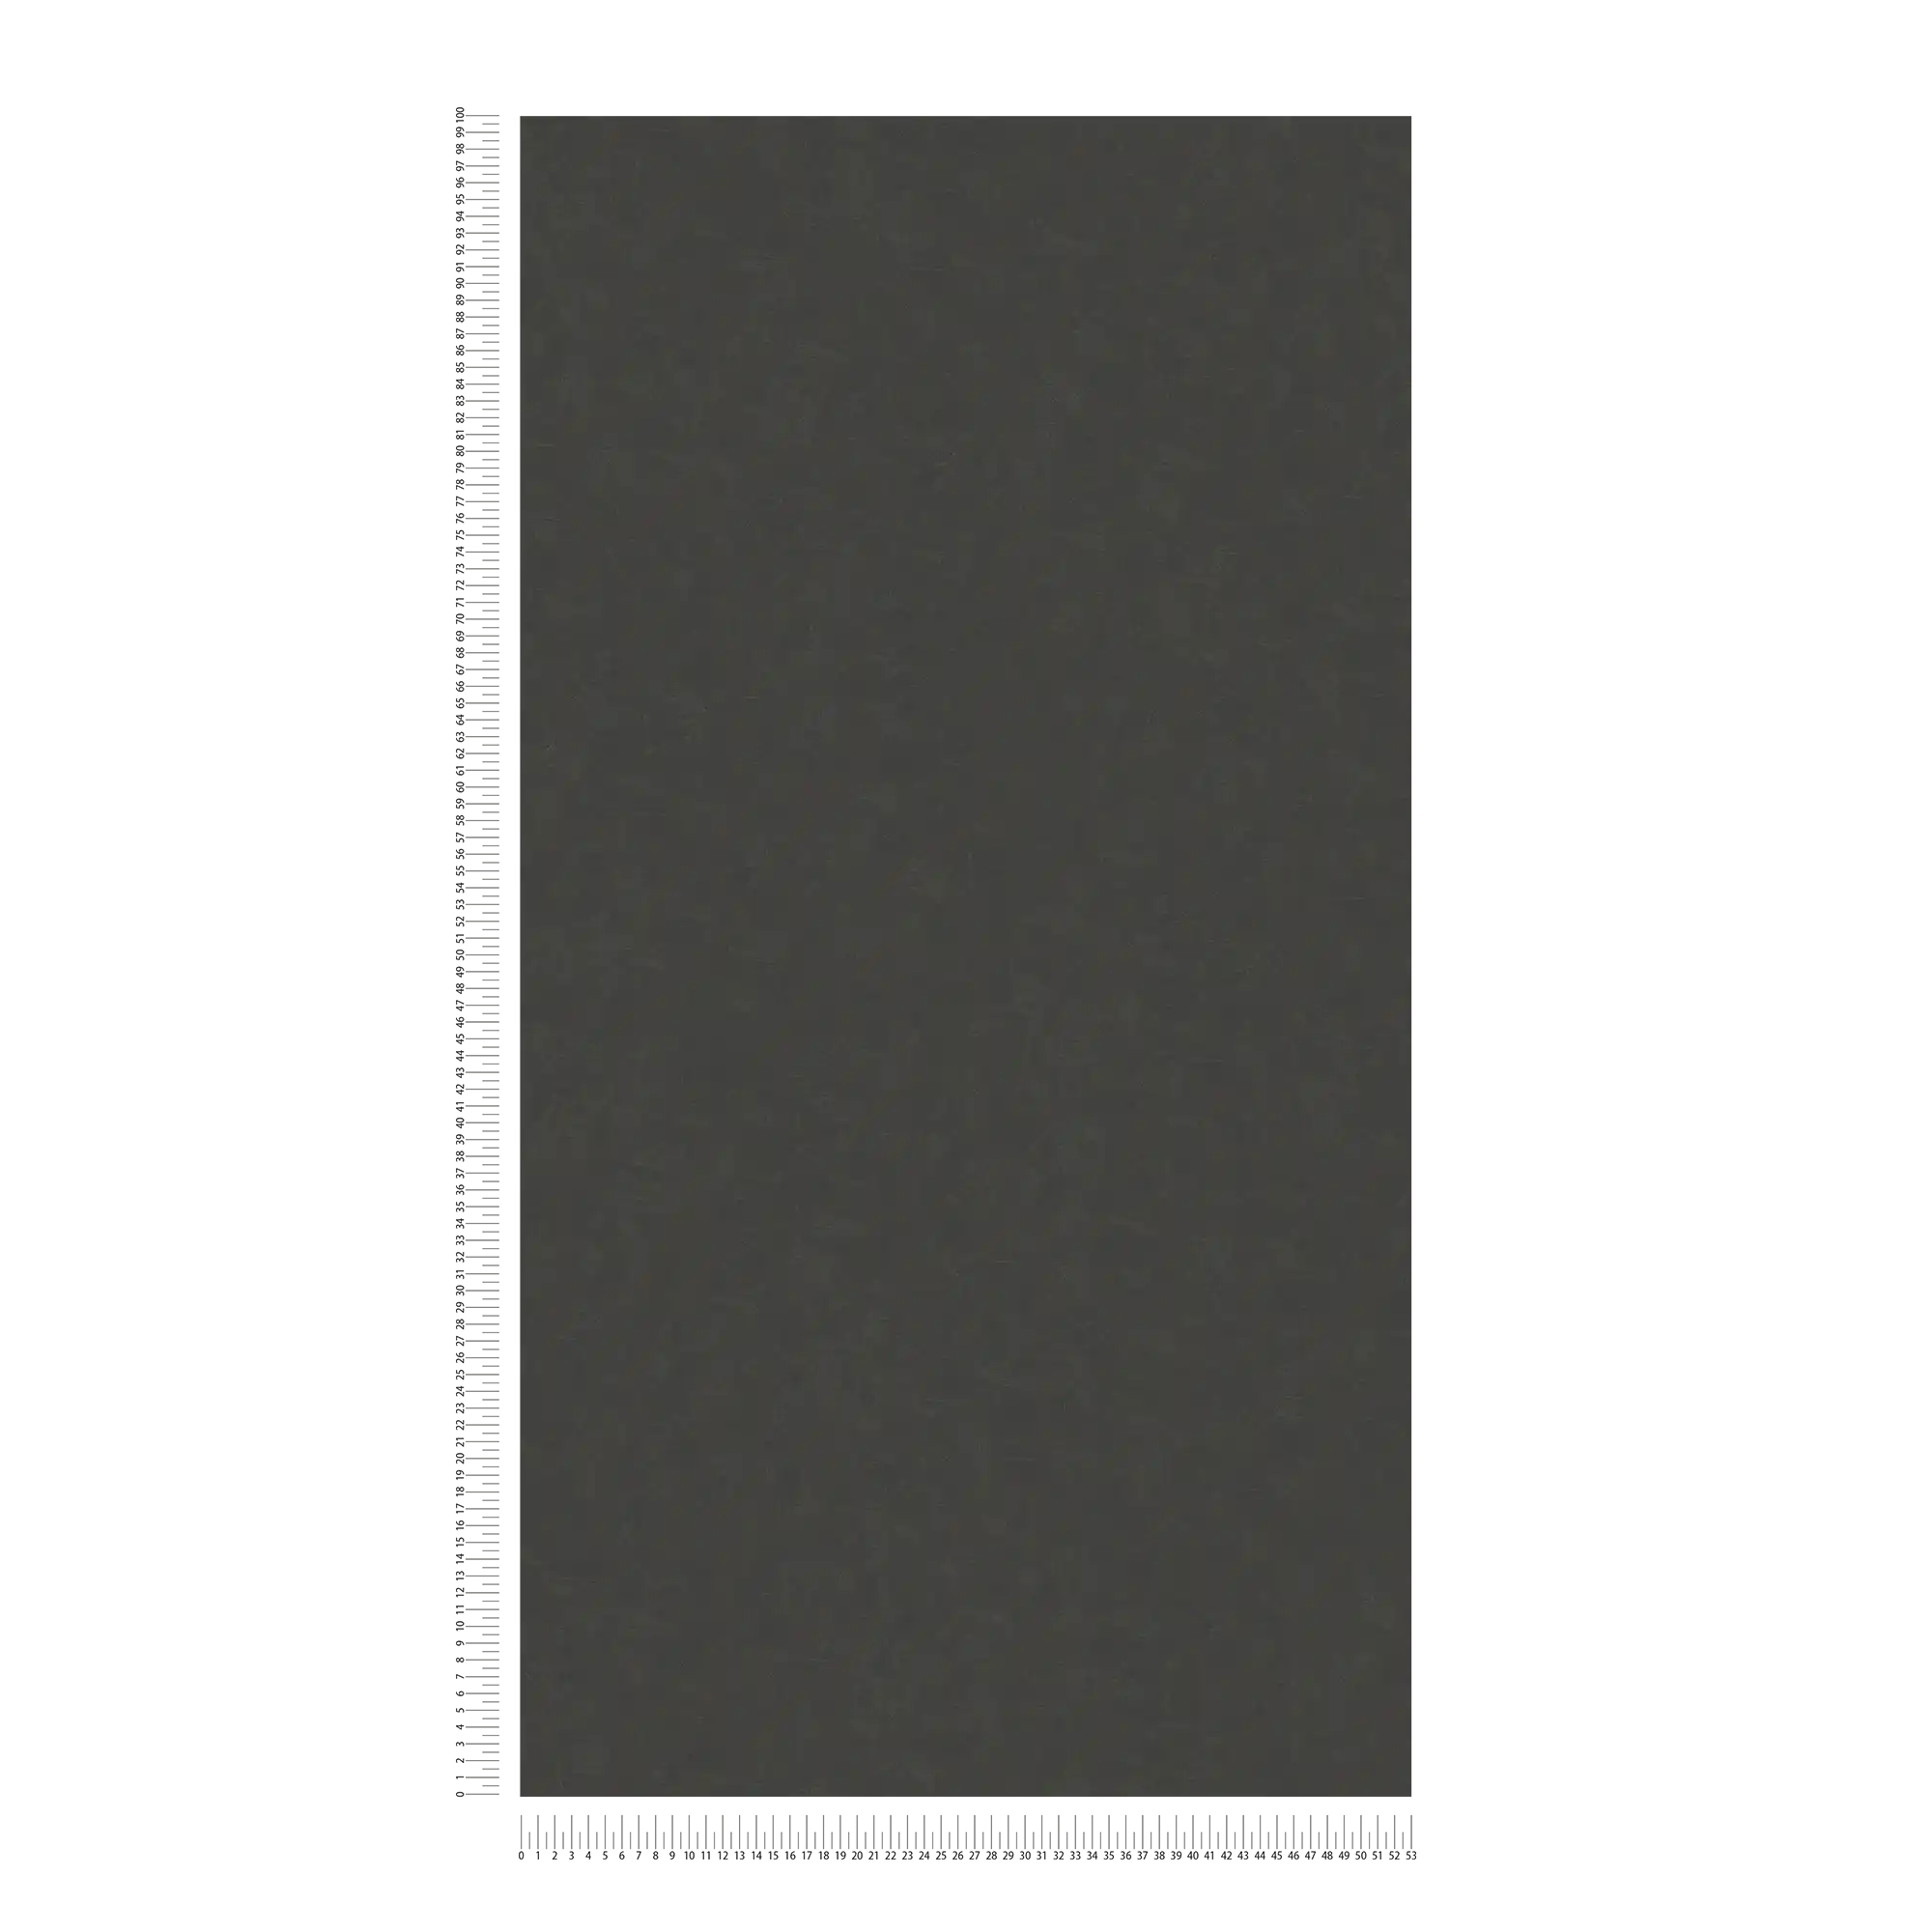             Non-woven wallpaper plain trowel plaster - black, anthracite
        